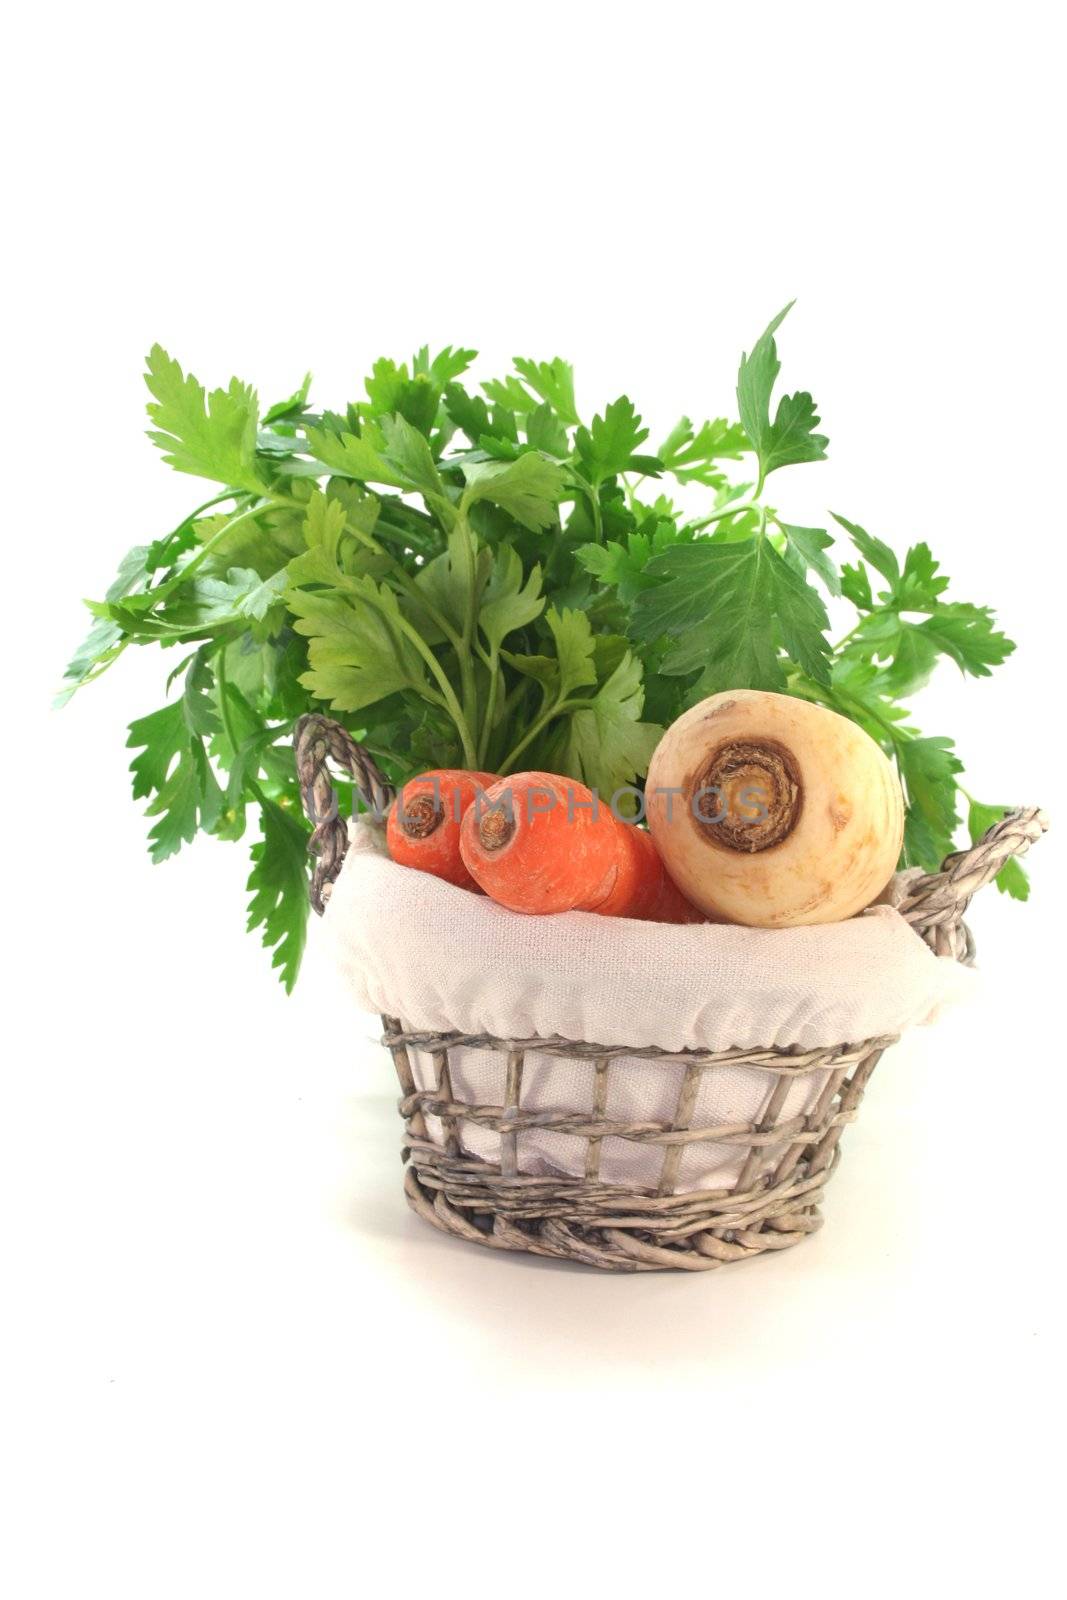 Greens with kohlrabi, carrots, leek, parsley and parsley root in the basket